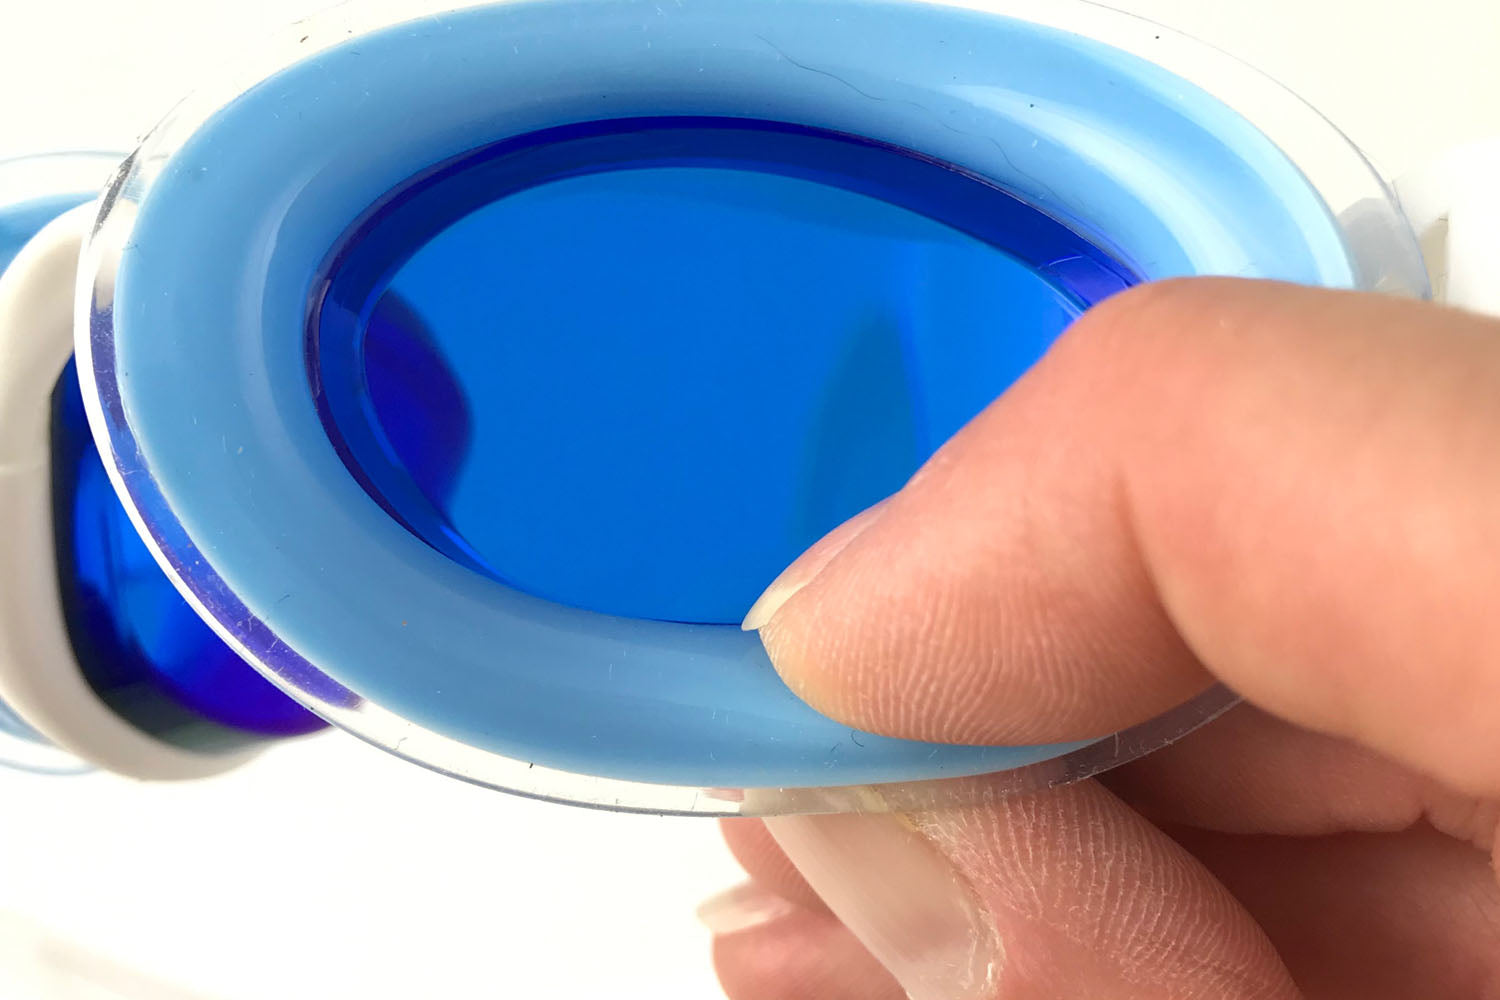 The Basilisk - Blue, blue tint